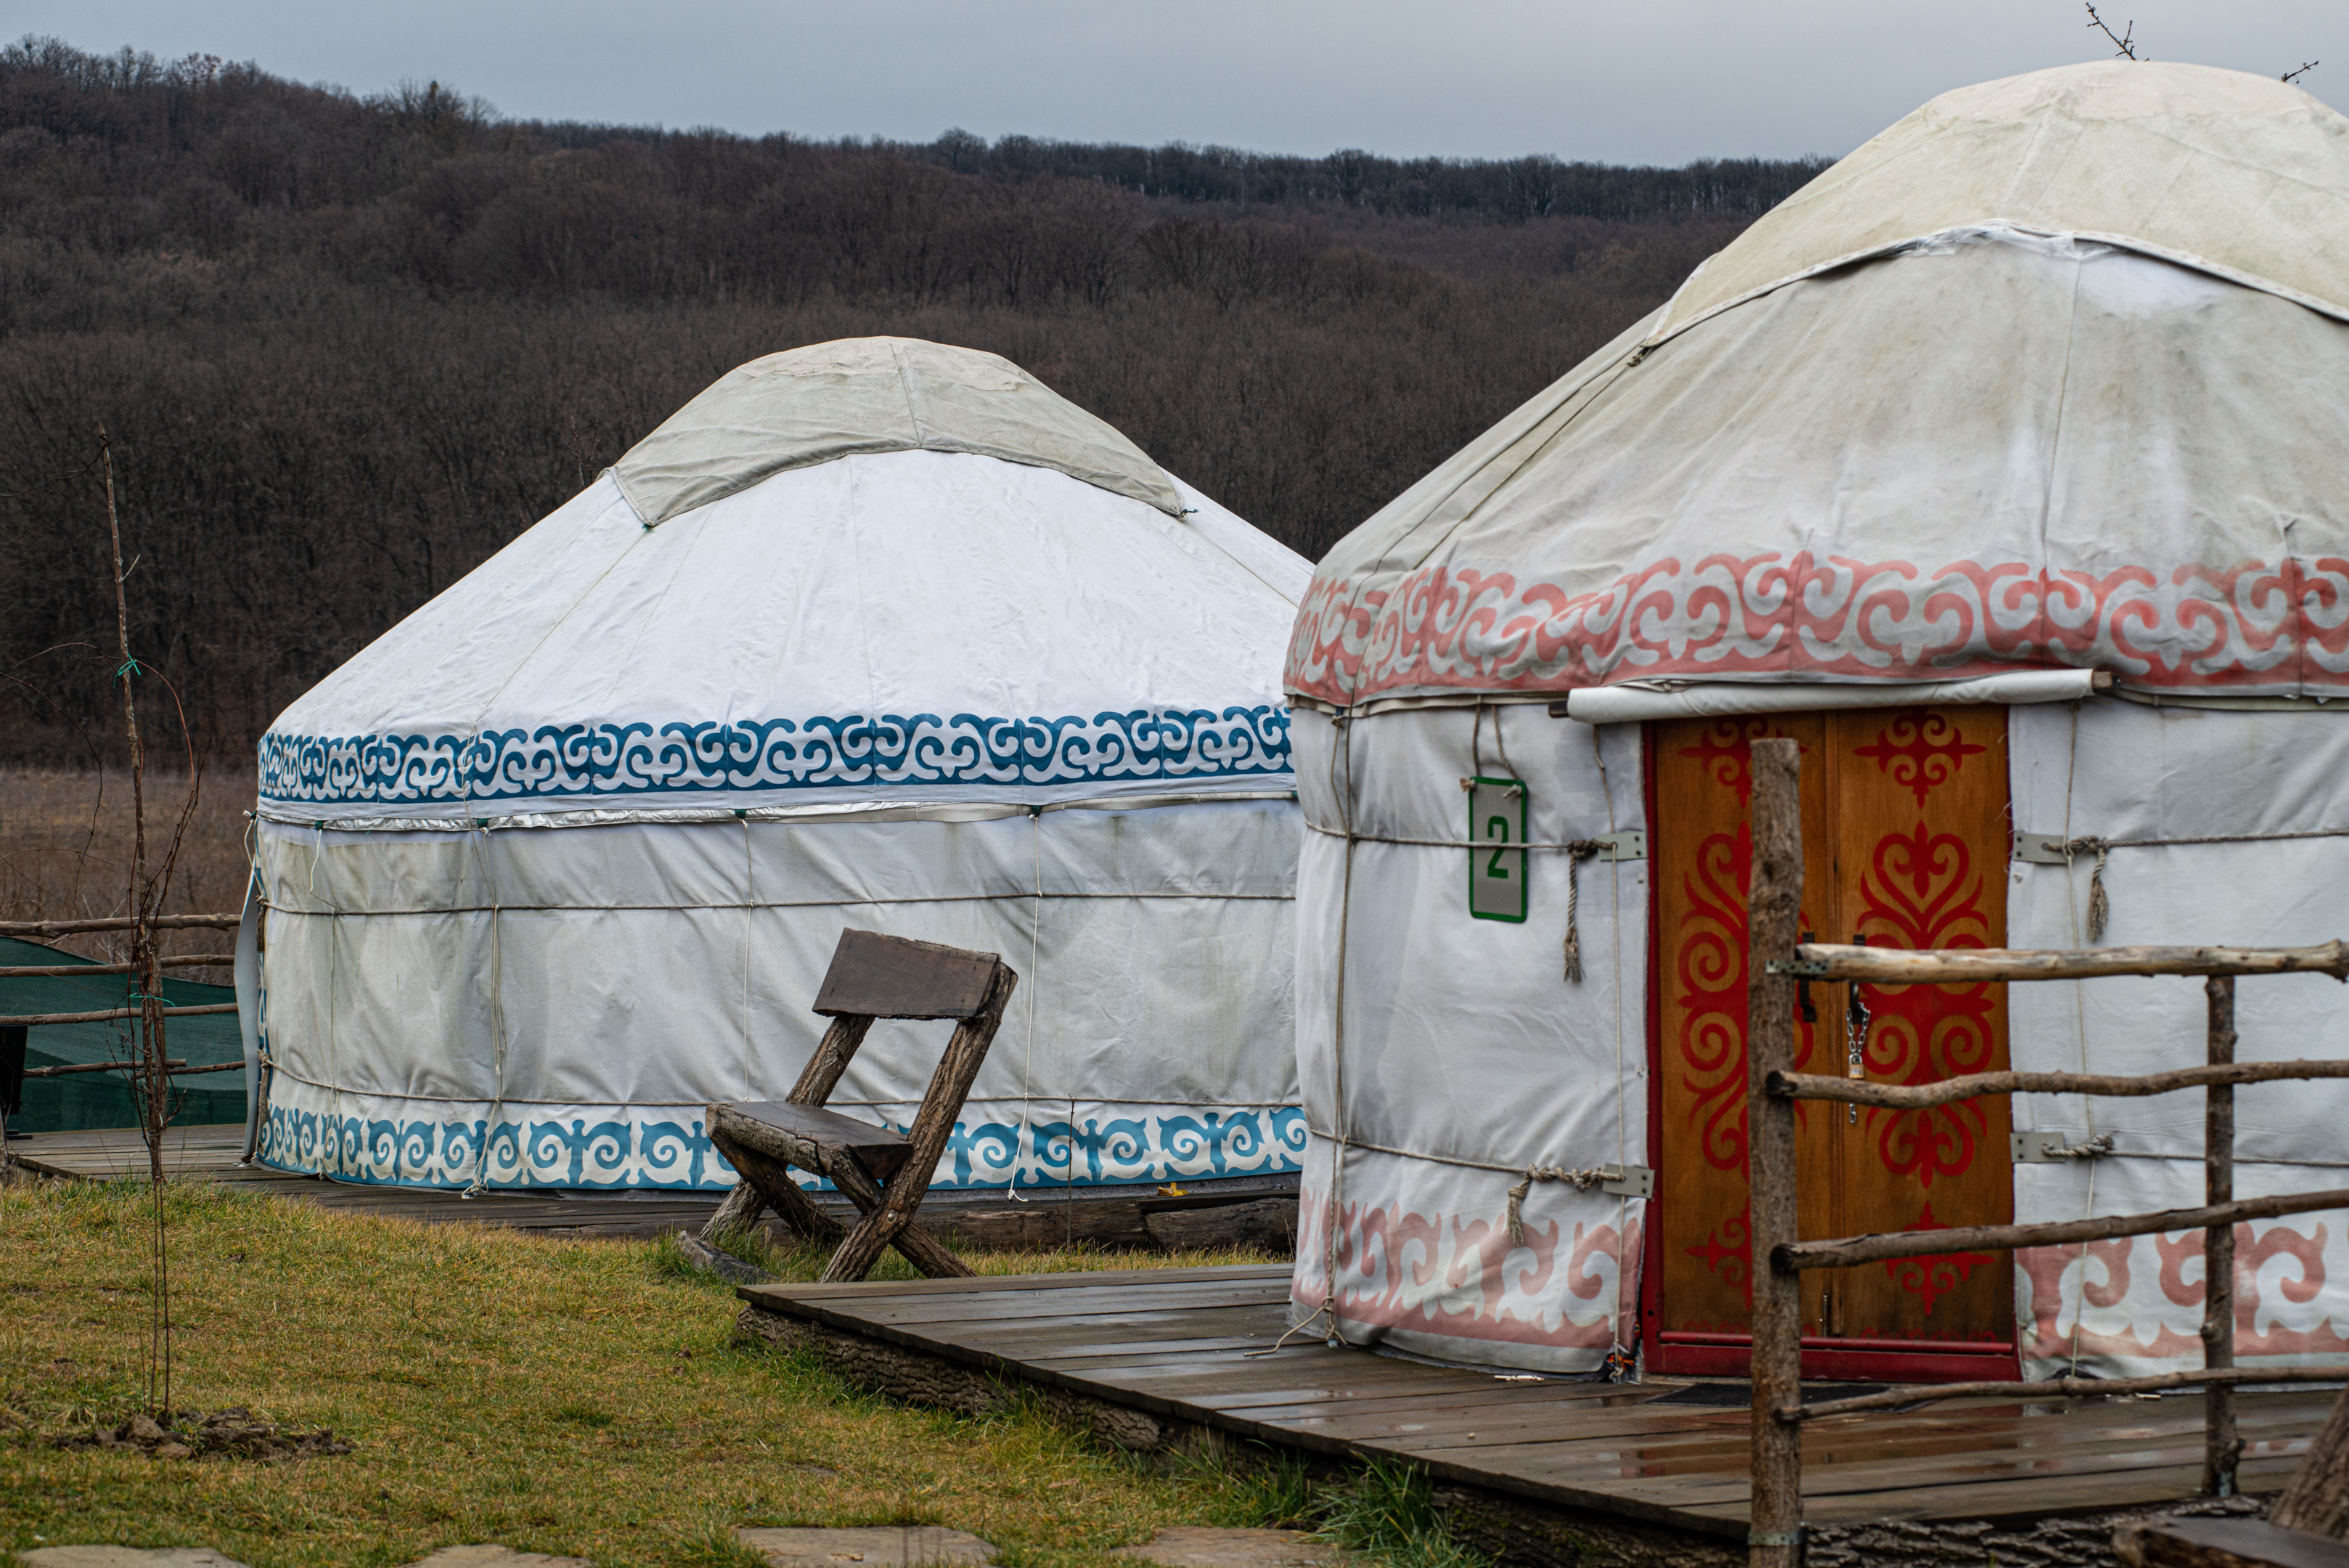 Yurts are popular unique Airbnbs